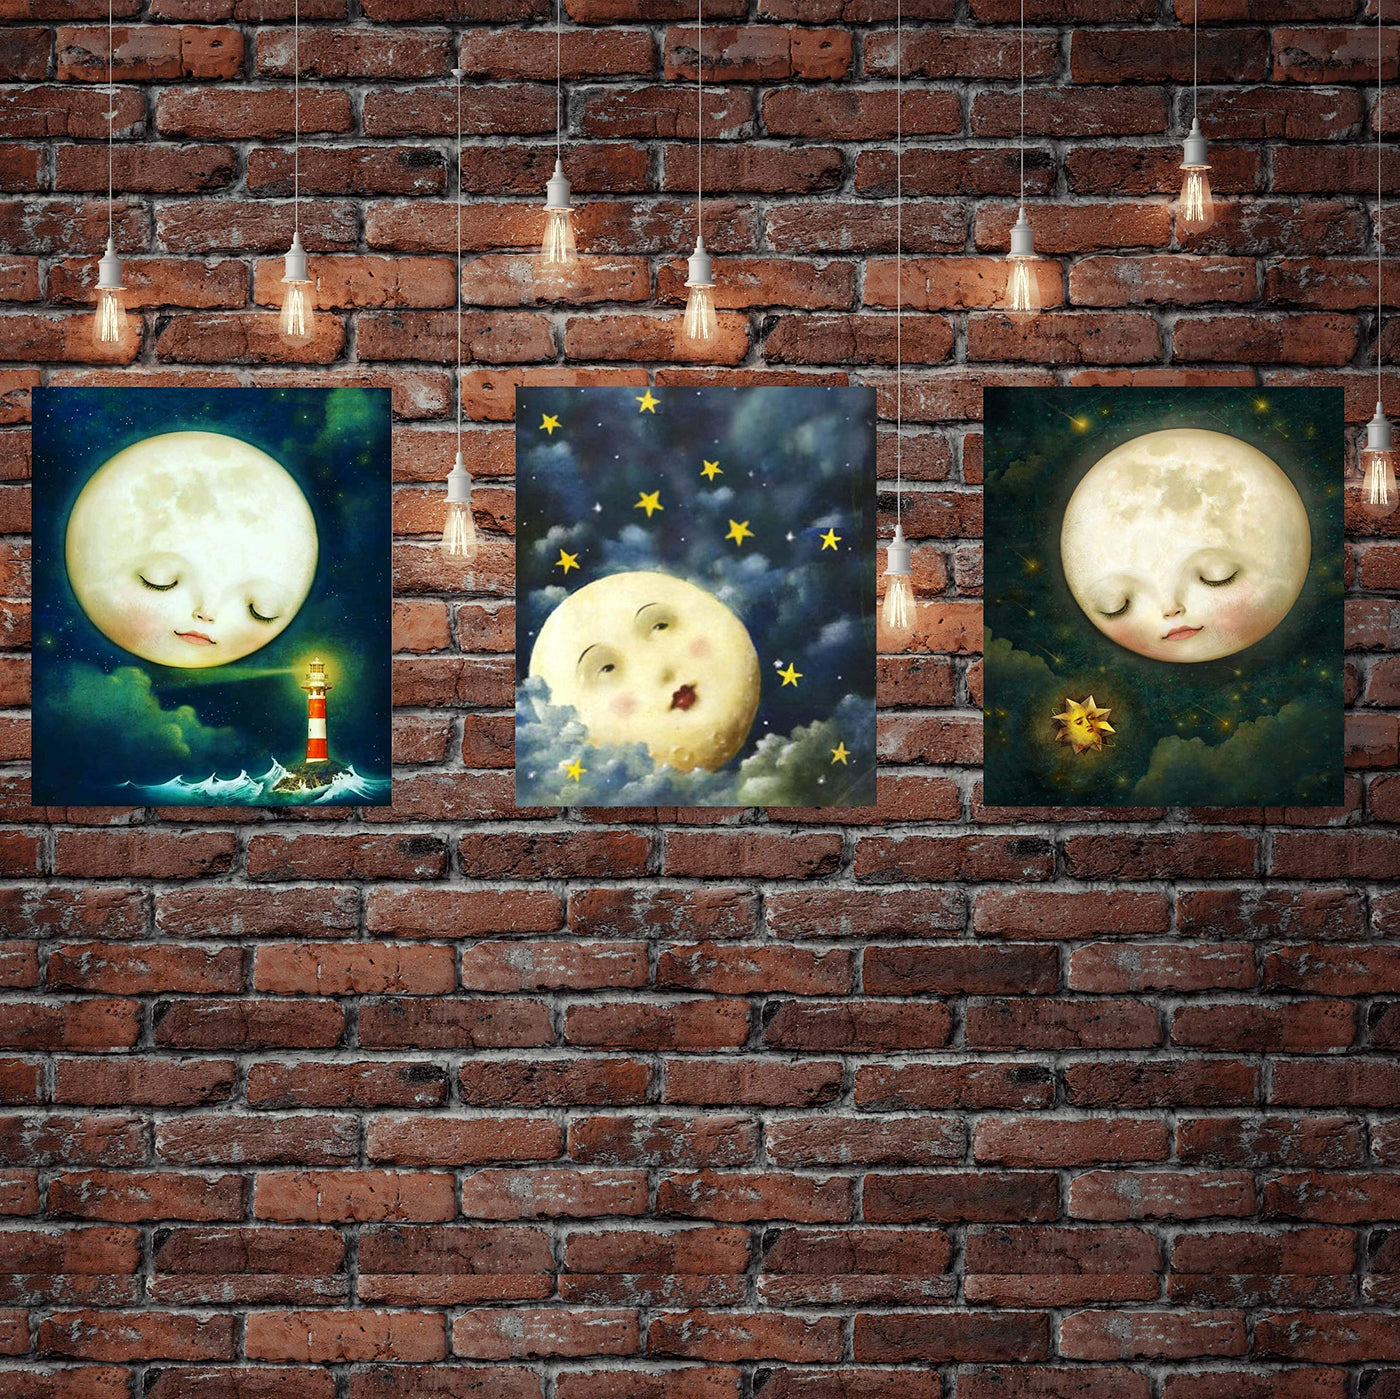 Goodnight Sweet Moon & Stars- 3 Image Set- 8 x 10's Prints Wall Art. Perfect Set for Baby Nursery Decor or Children Bedroom Decor.